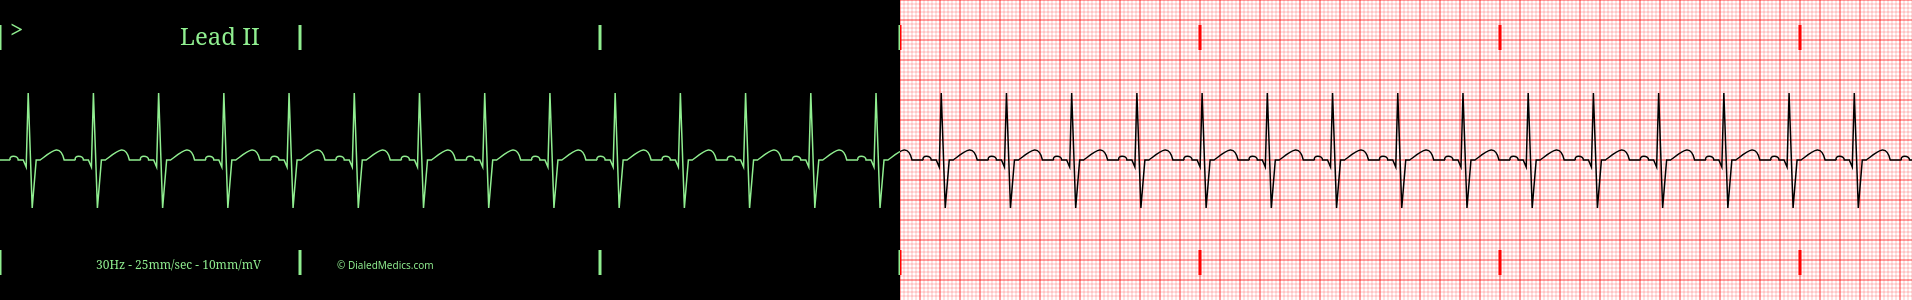 Regular Sinus Rhythm EKG example, split printout / monitor display.